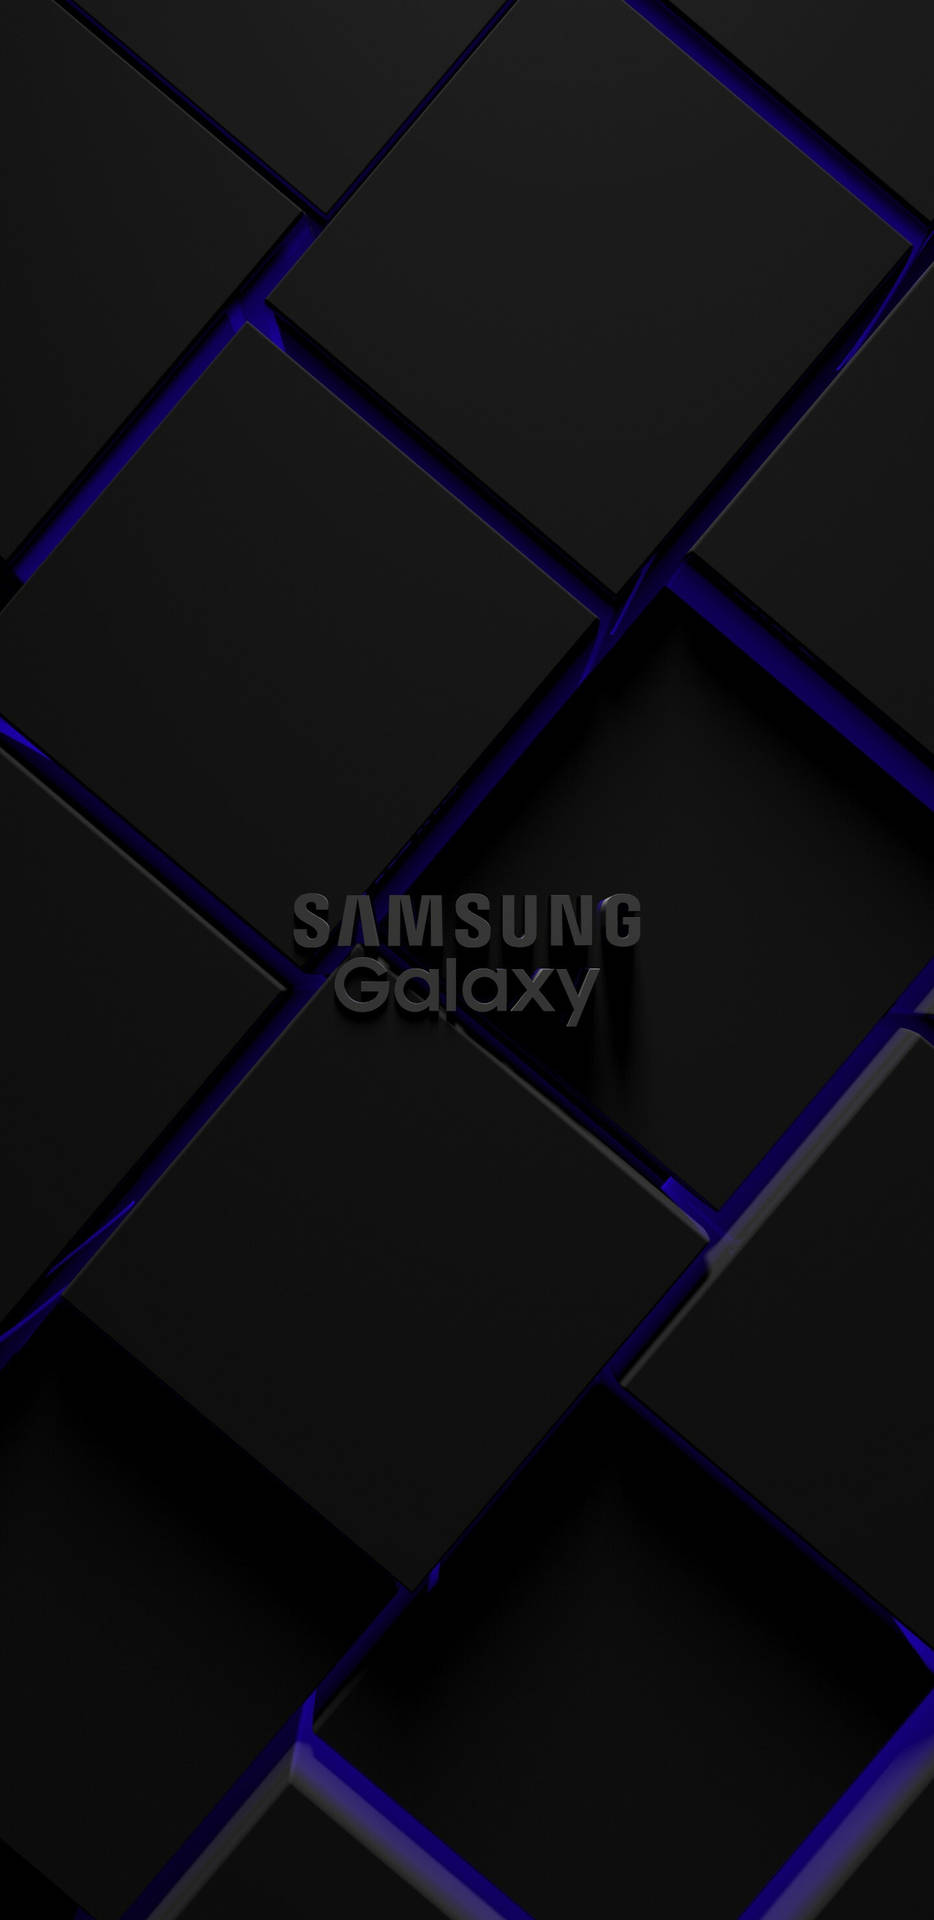 Samsung Galaxy Cubes Purple Light